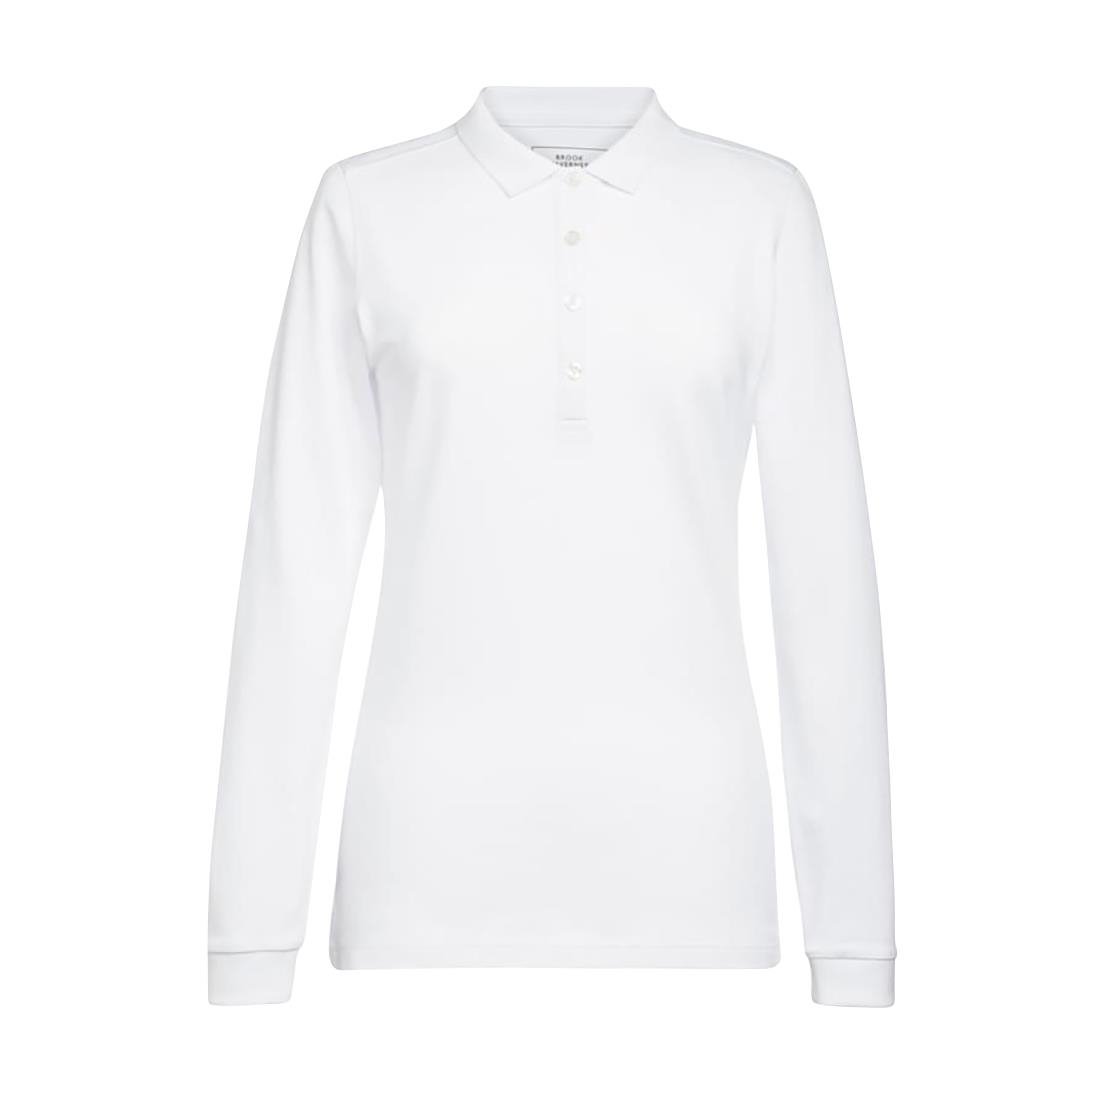 BA141-M Brook Taverner Anna Womens Long Sleeve Polo Shirt White Size M